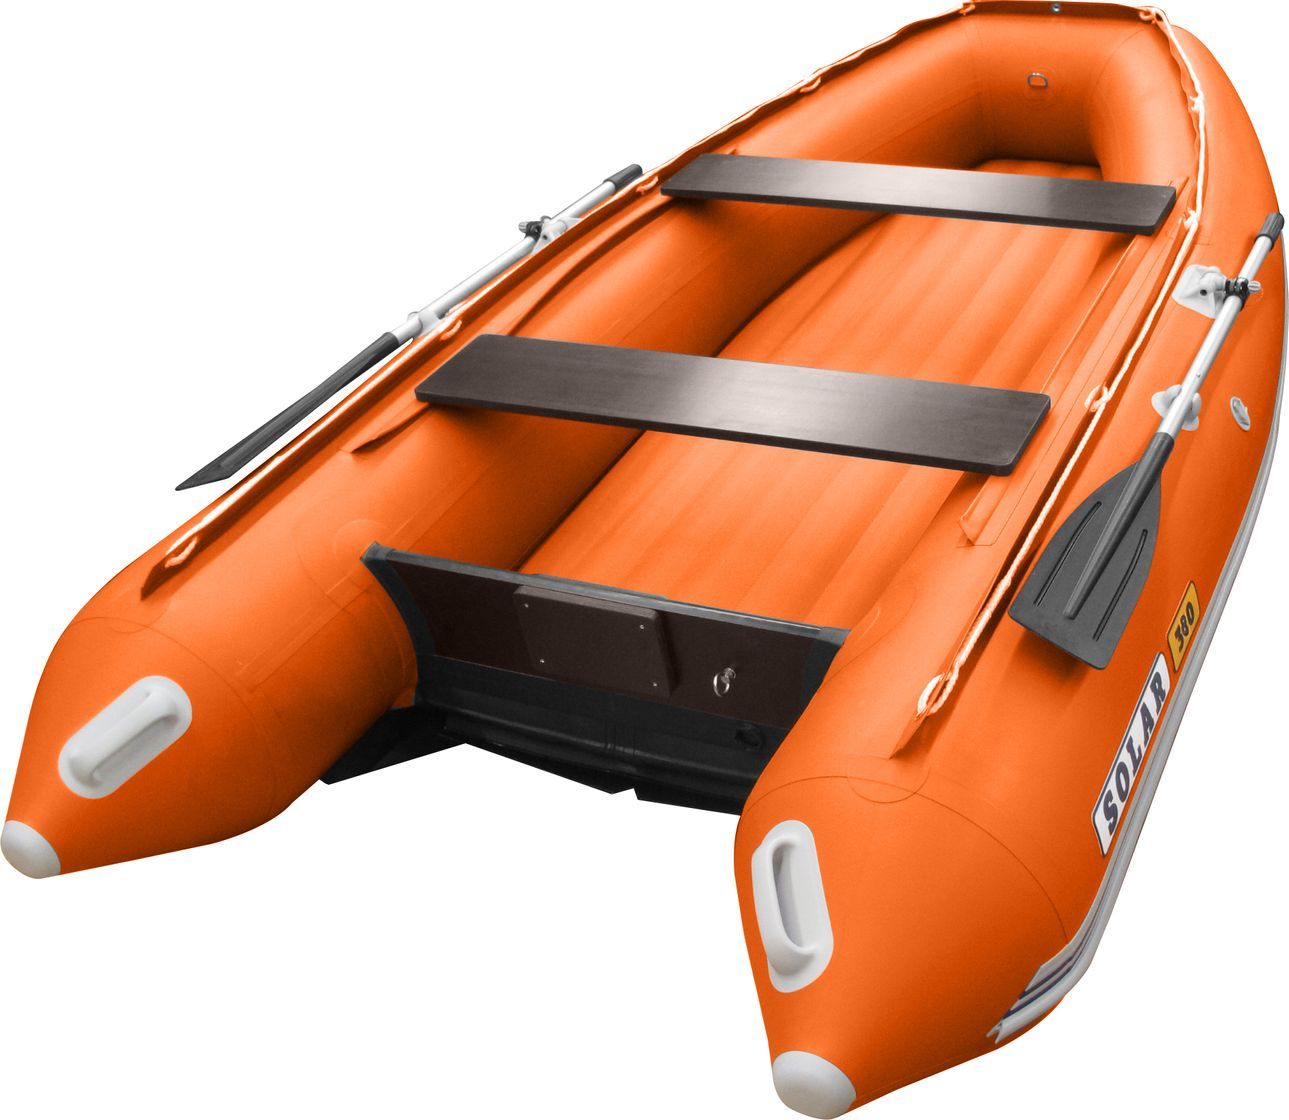 Надувная лодка ПВХ SOLAR-350 К (Максима), оранжевый SLR350k_max_orange надувная лодка пвх хатанга jet 425 lux нднд оранжевый sibriver hatl425ndob j